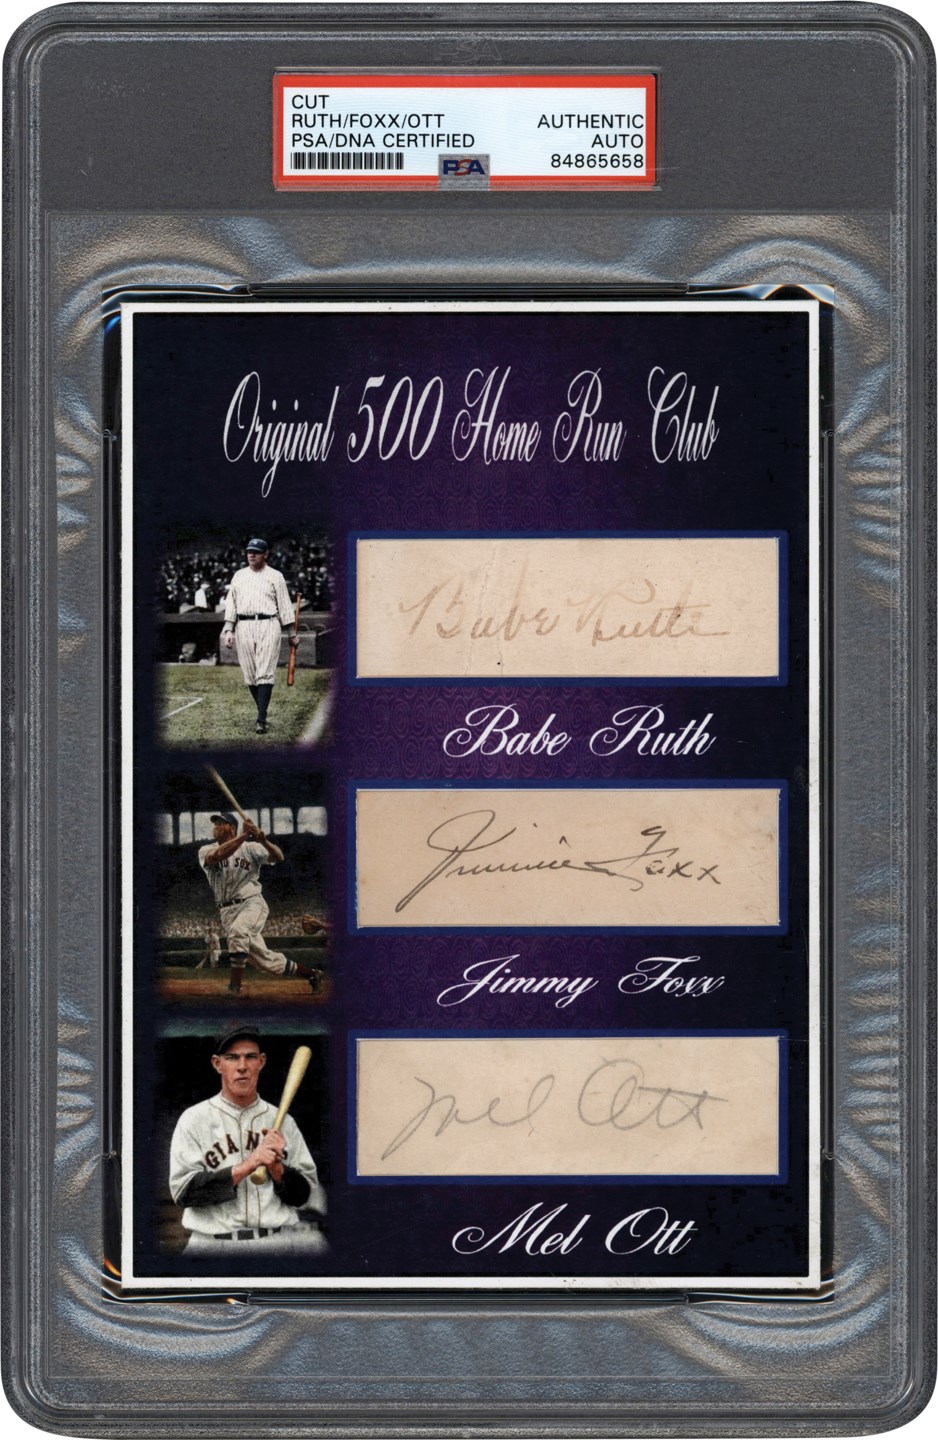 Baseball Autographs - Original 500 Home Run Club Signed Card of Babe Ruth, Jimmie Foxx, and Mel Ott (PSA)